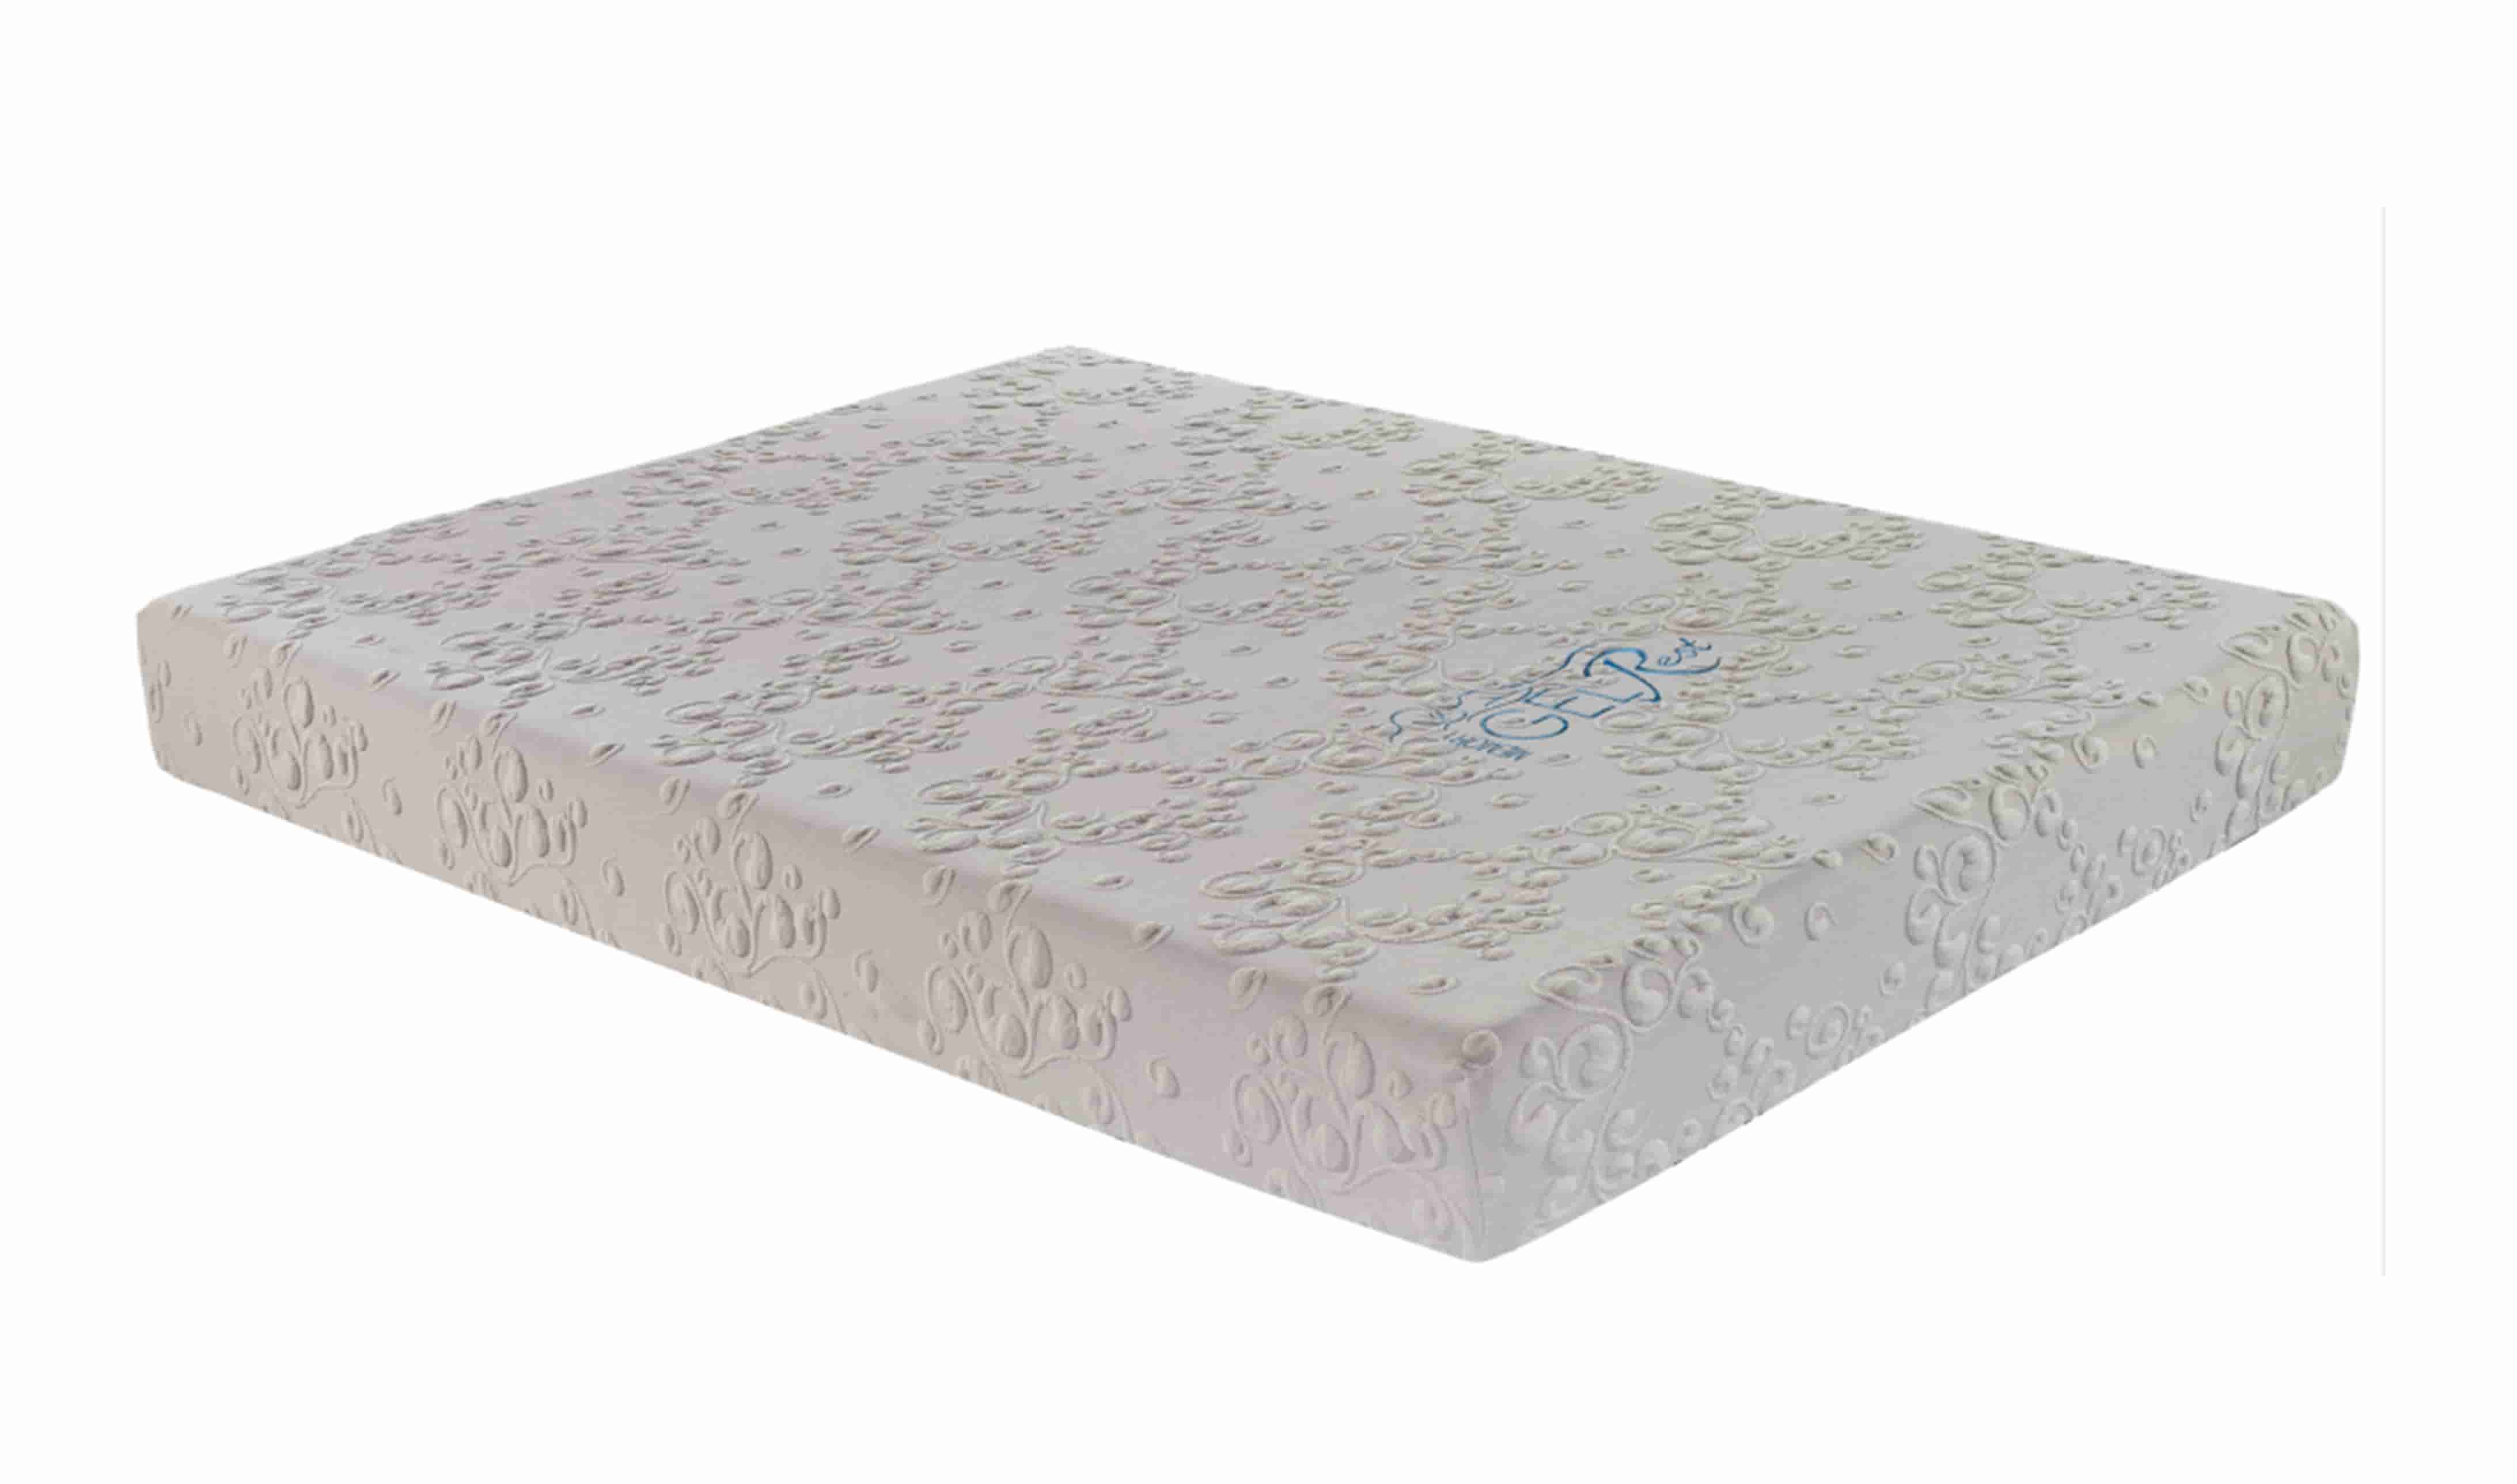 High Quality King Size Luxury Memory Foam Bed Mattress